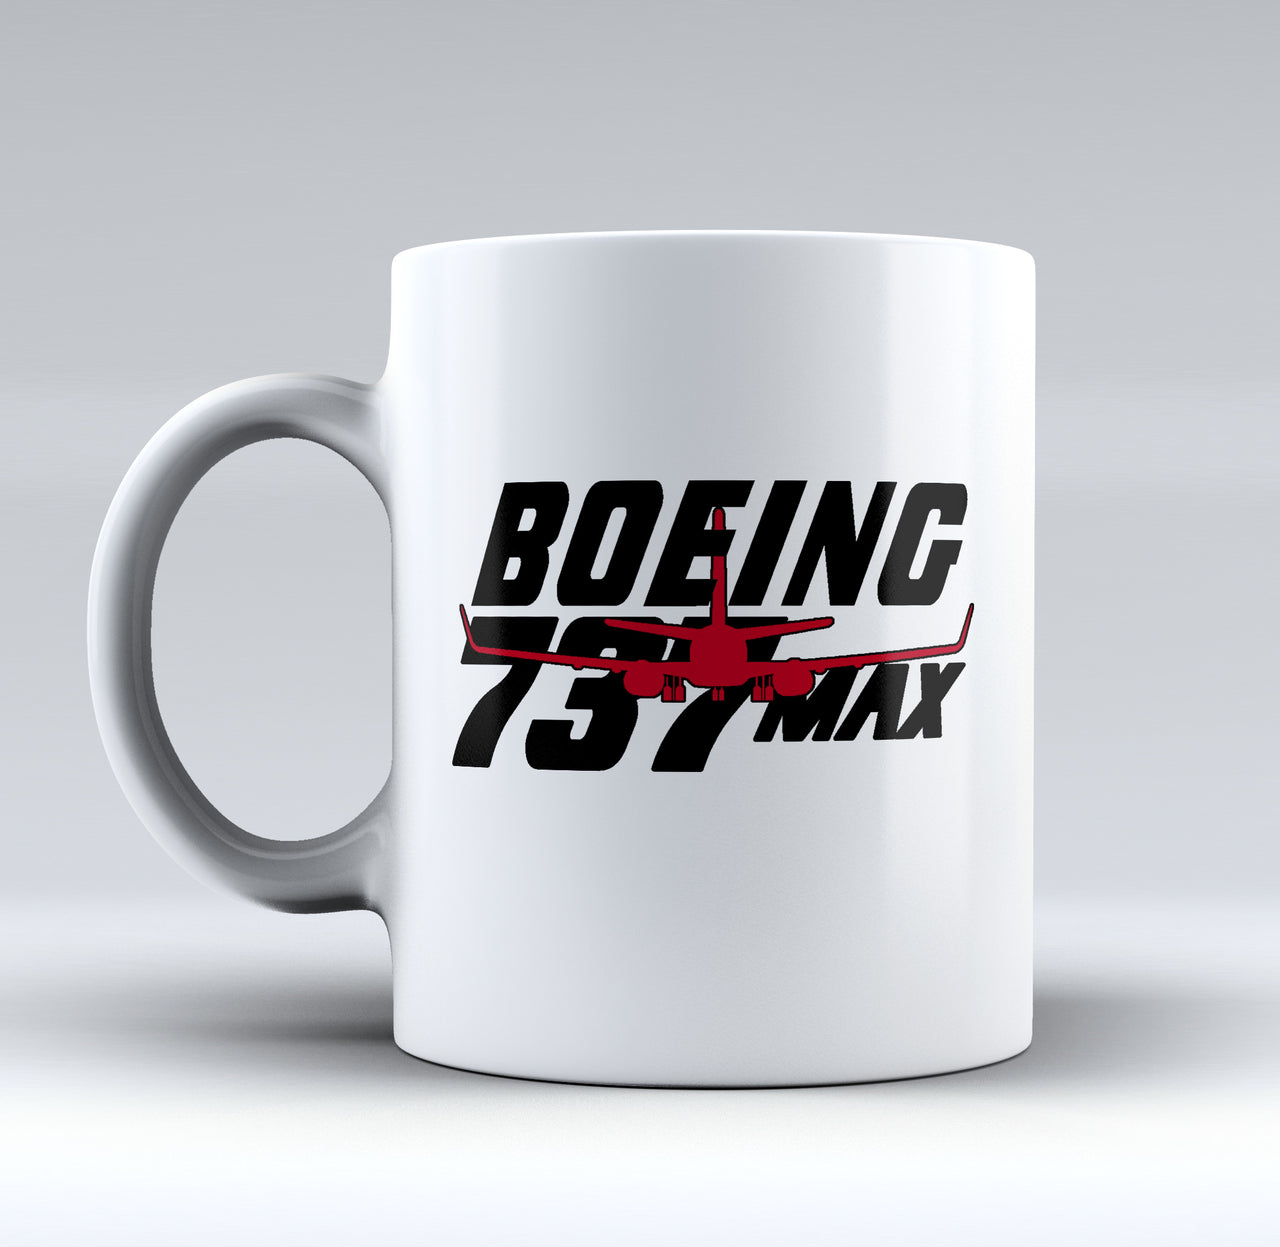 Amazing Boeing 737 Max Designed Mugs